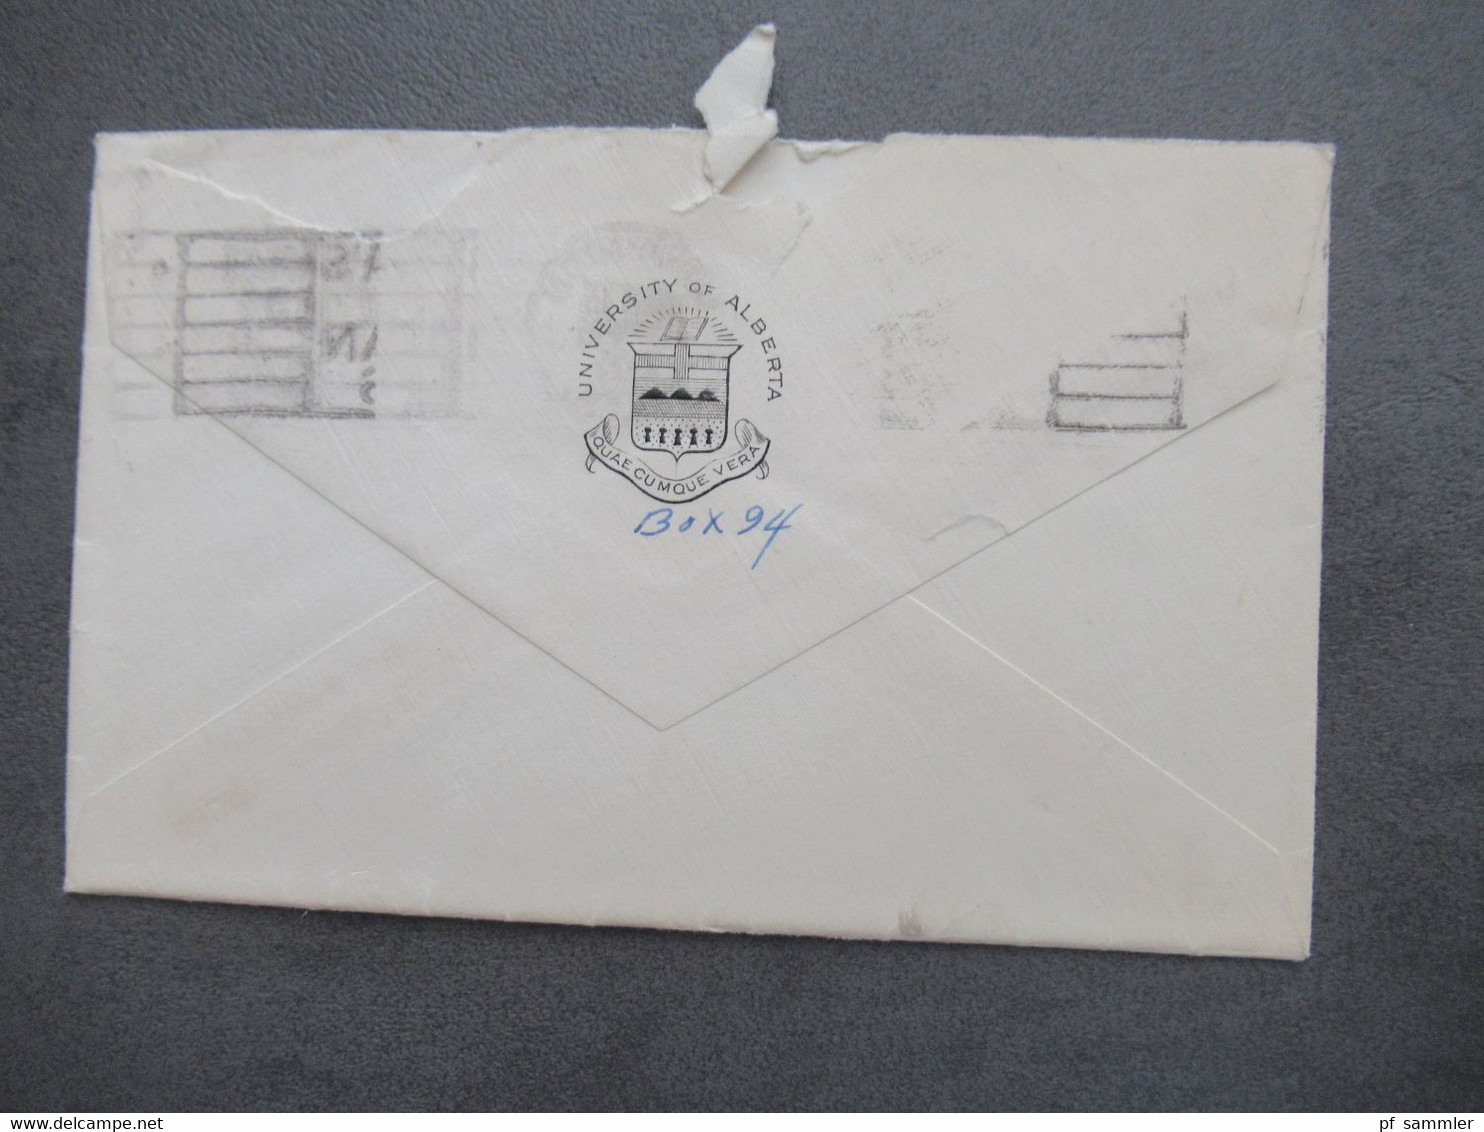 Kanada 1940 Air Mail Letter Umschlag University Of Alberta Quae Cumque Vera Brief Nach Hanover New Hamphsire - Covers & Documents